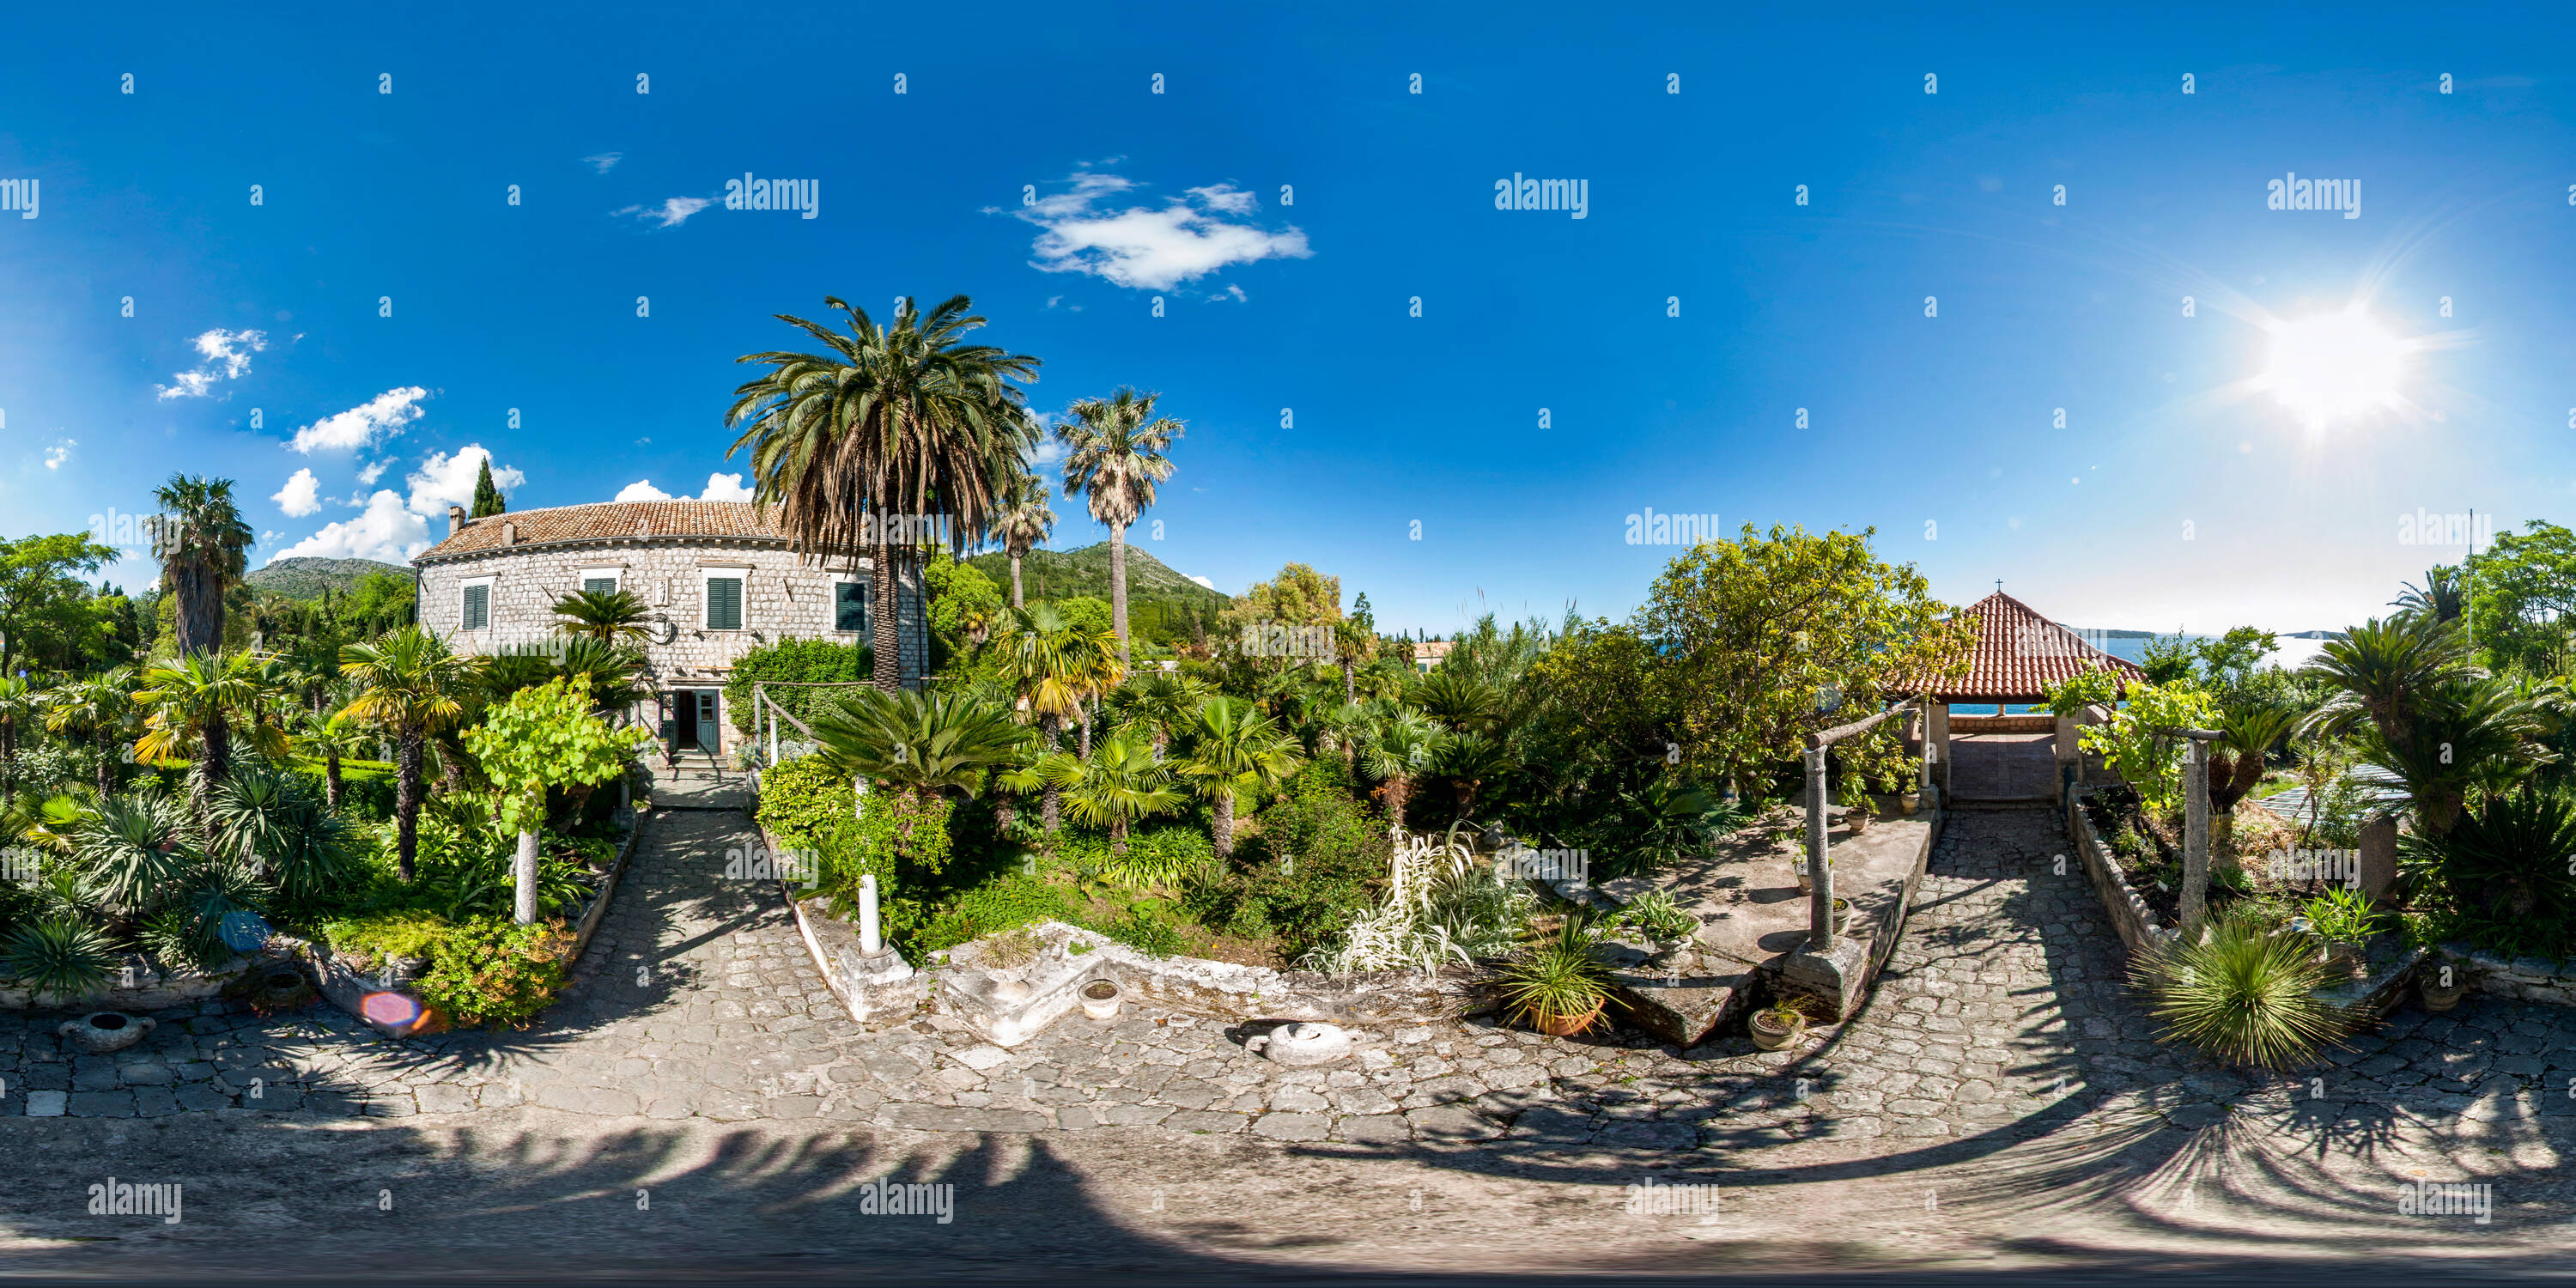 360 degree panoramic view of Arboretum trsteno - the oldest arboretum in the world -  established 1494.